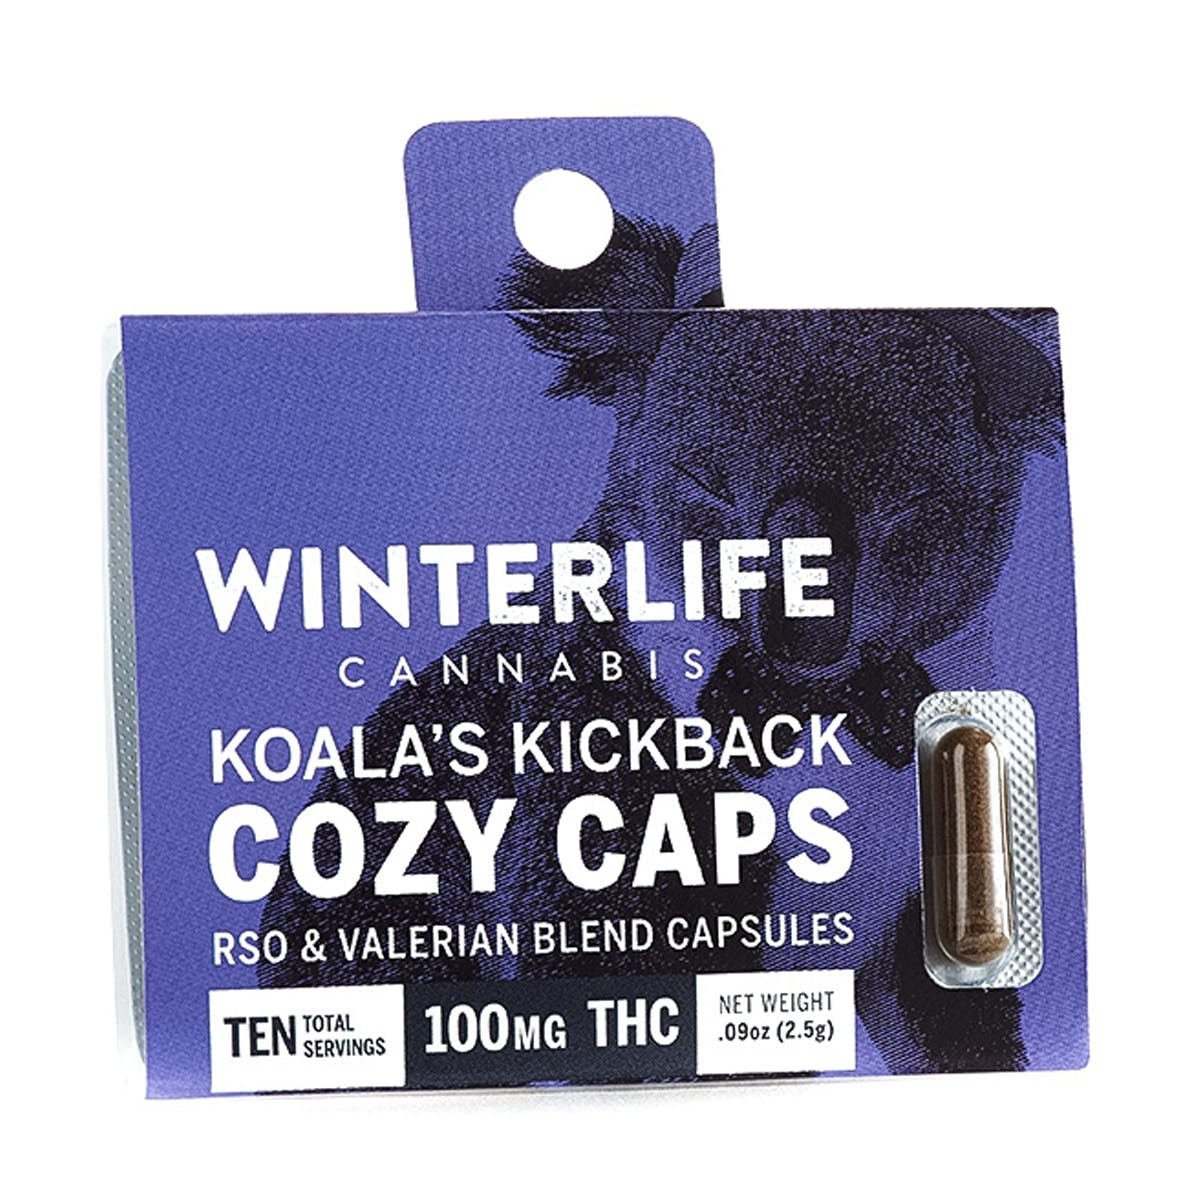 edible-winterlife-cannabis-koalaa-c2-80-c2-99s-cozy-caps-100-mg